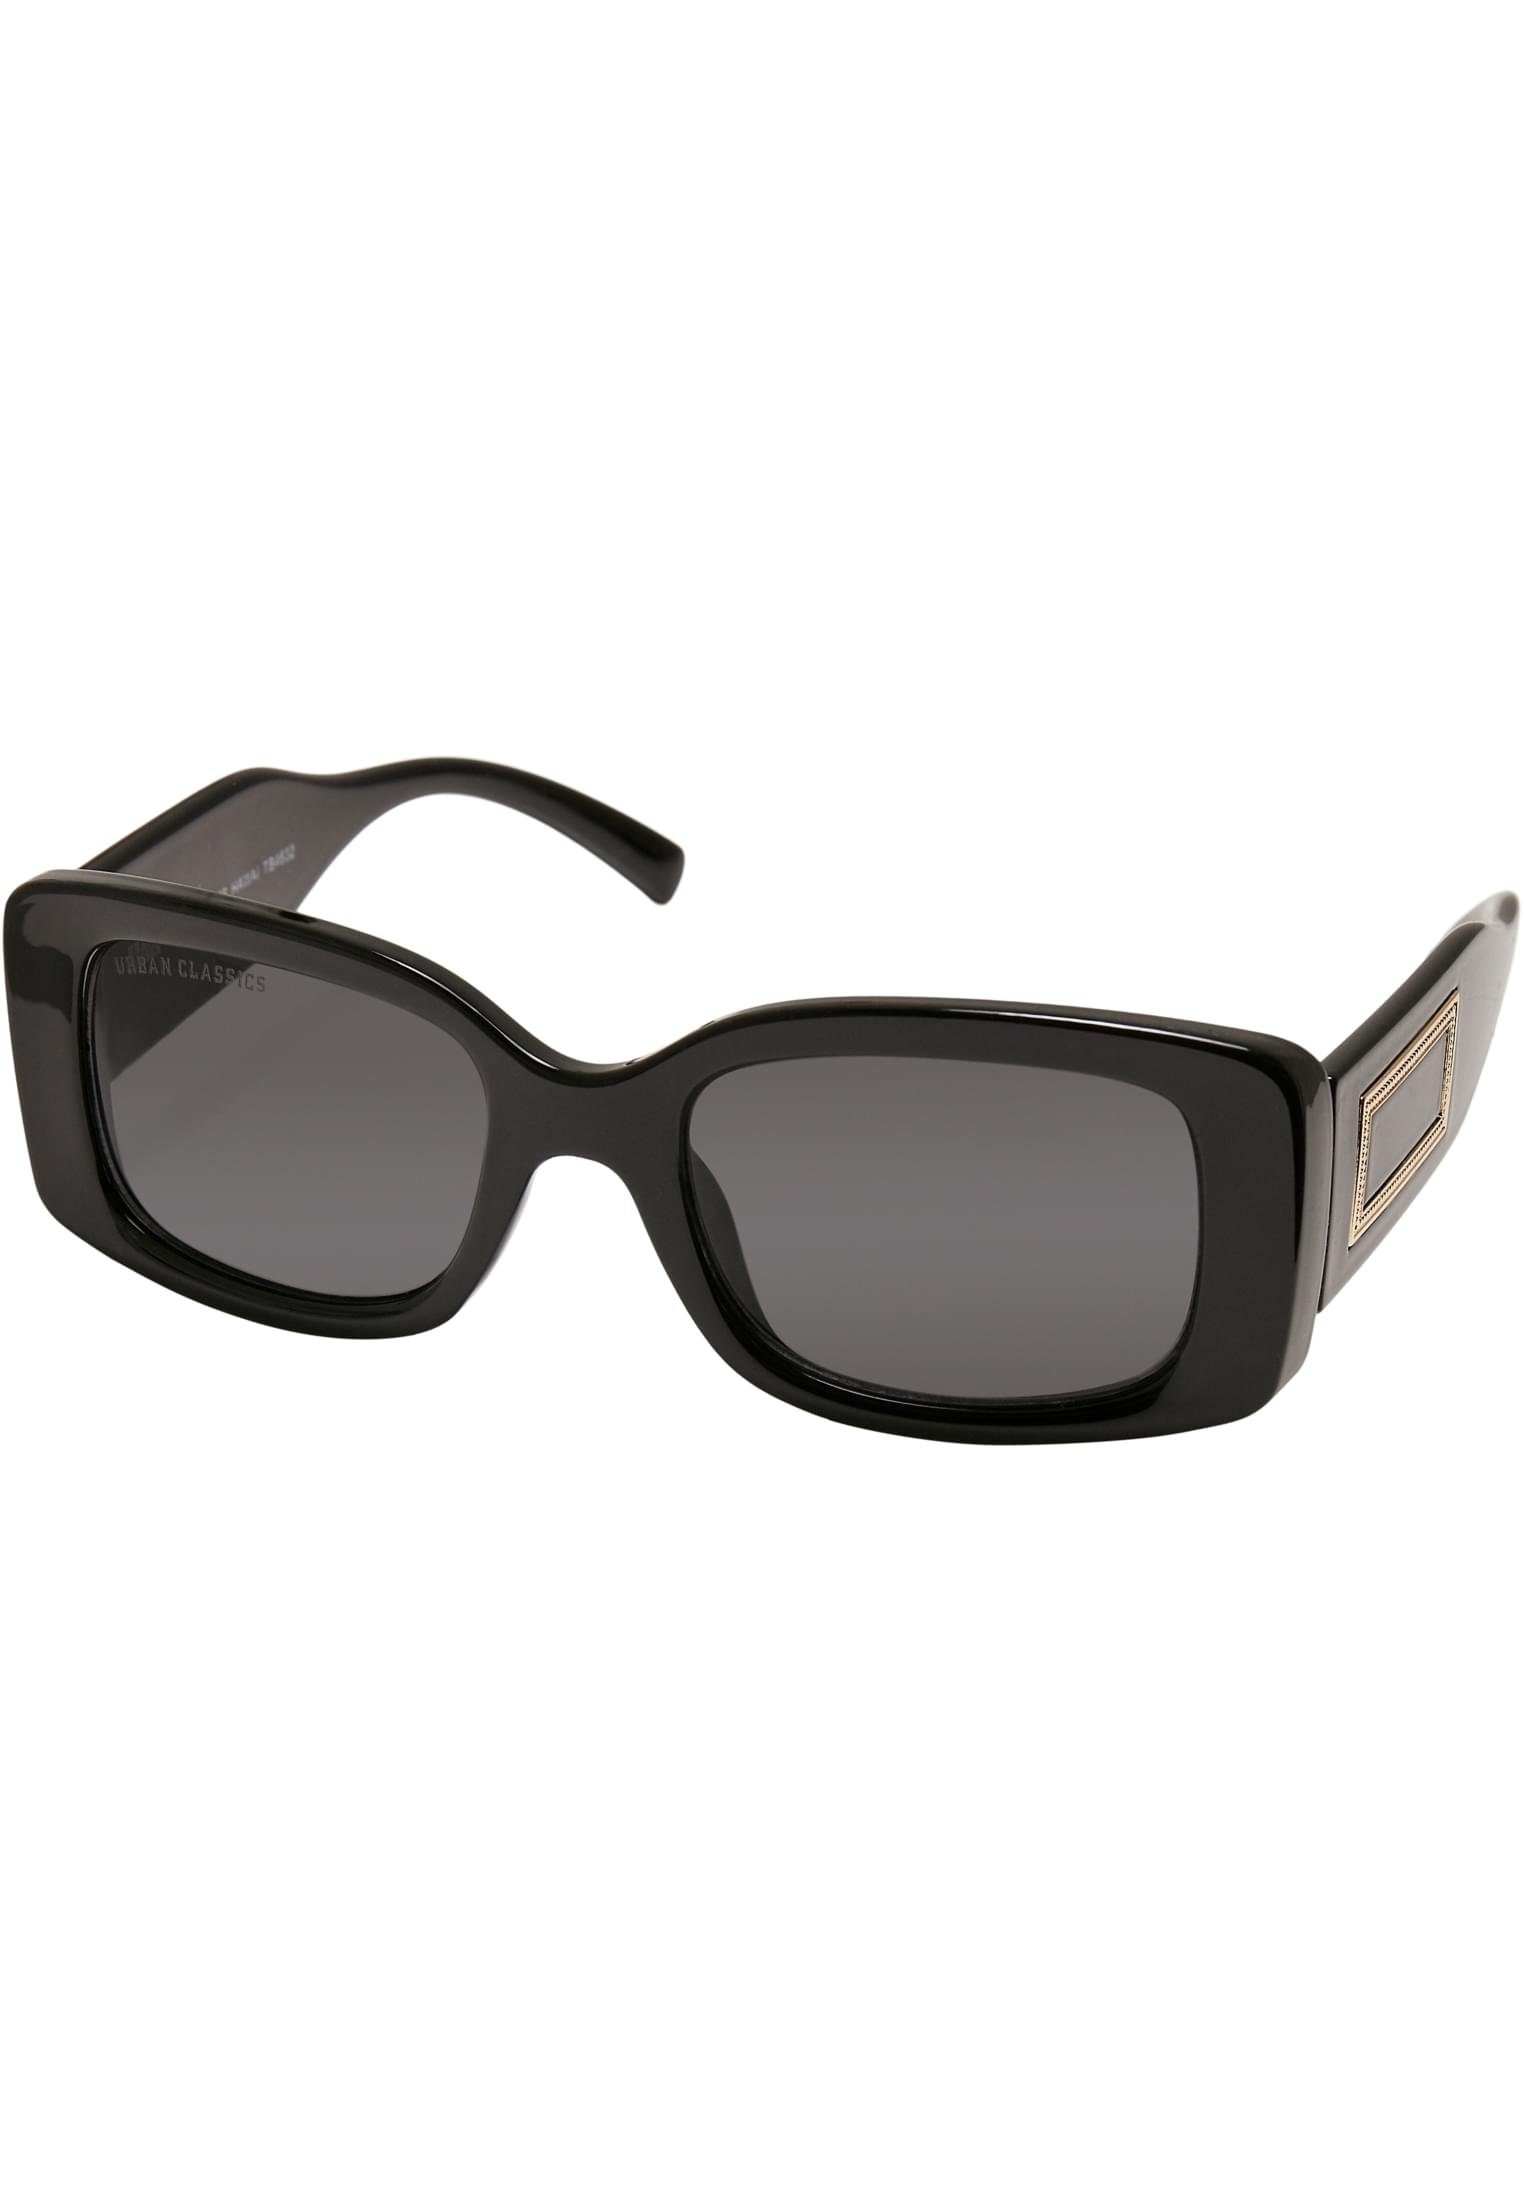 Sonnenbrille Hawai CLASSICS URBAN Sunglasses Unisex